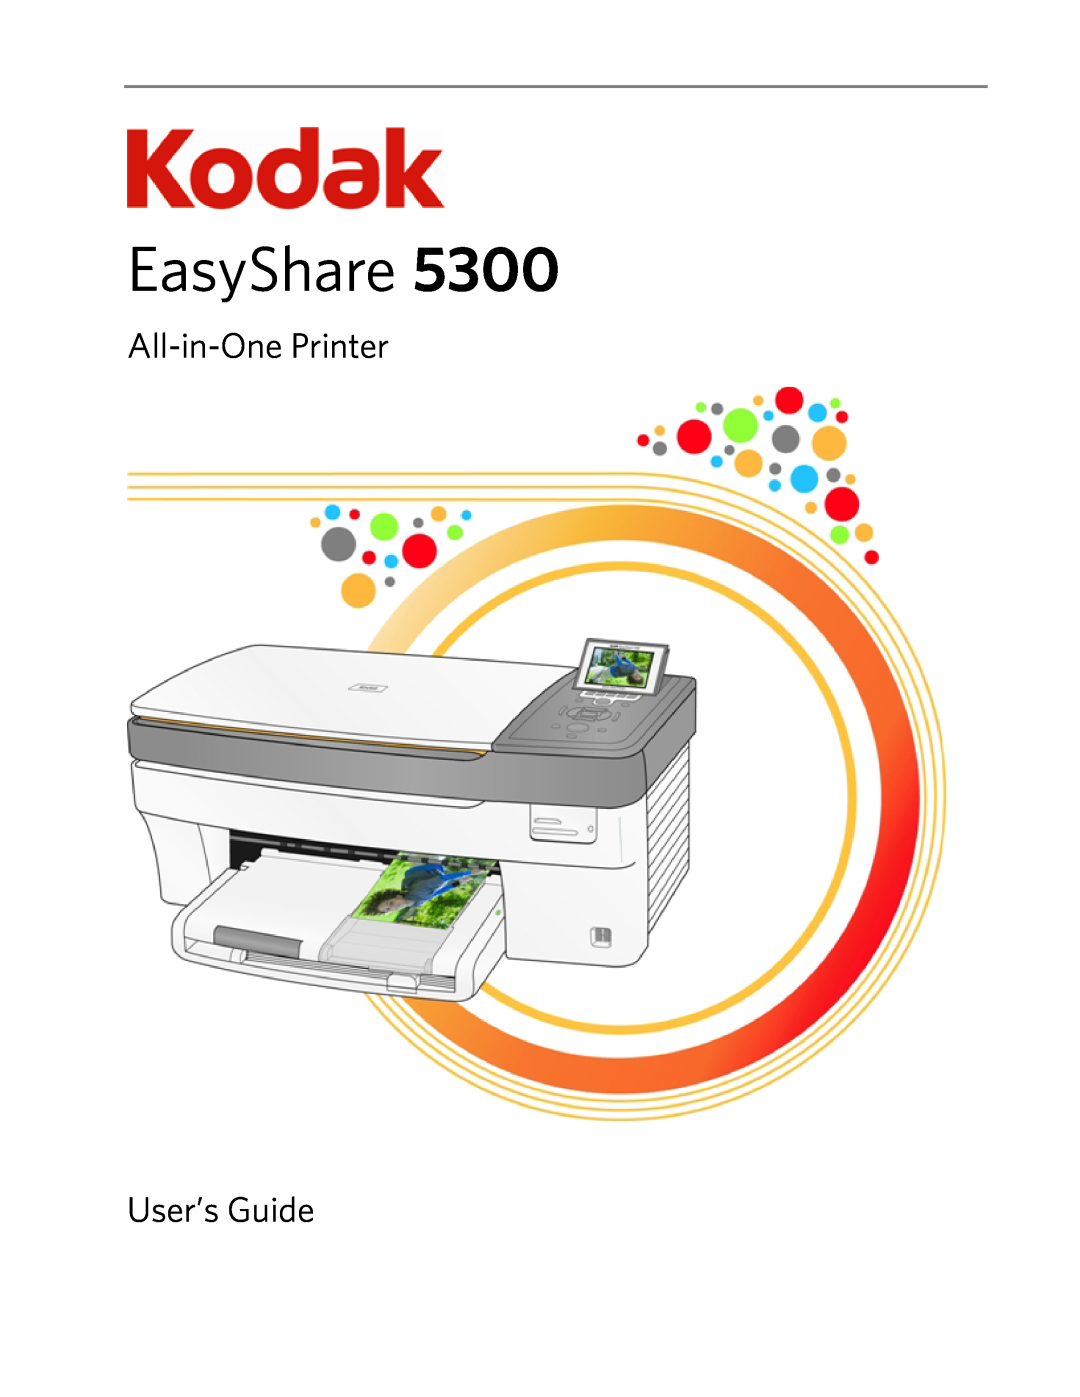 Kodak 5300 manual EasyShare, All-in-One Printer User’s Guide 